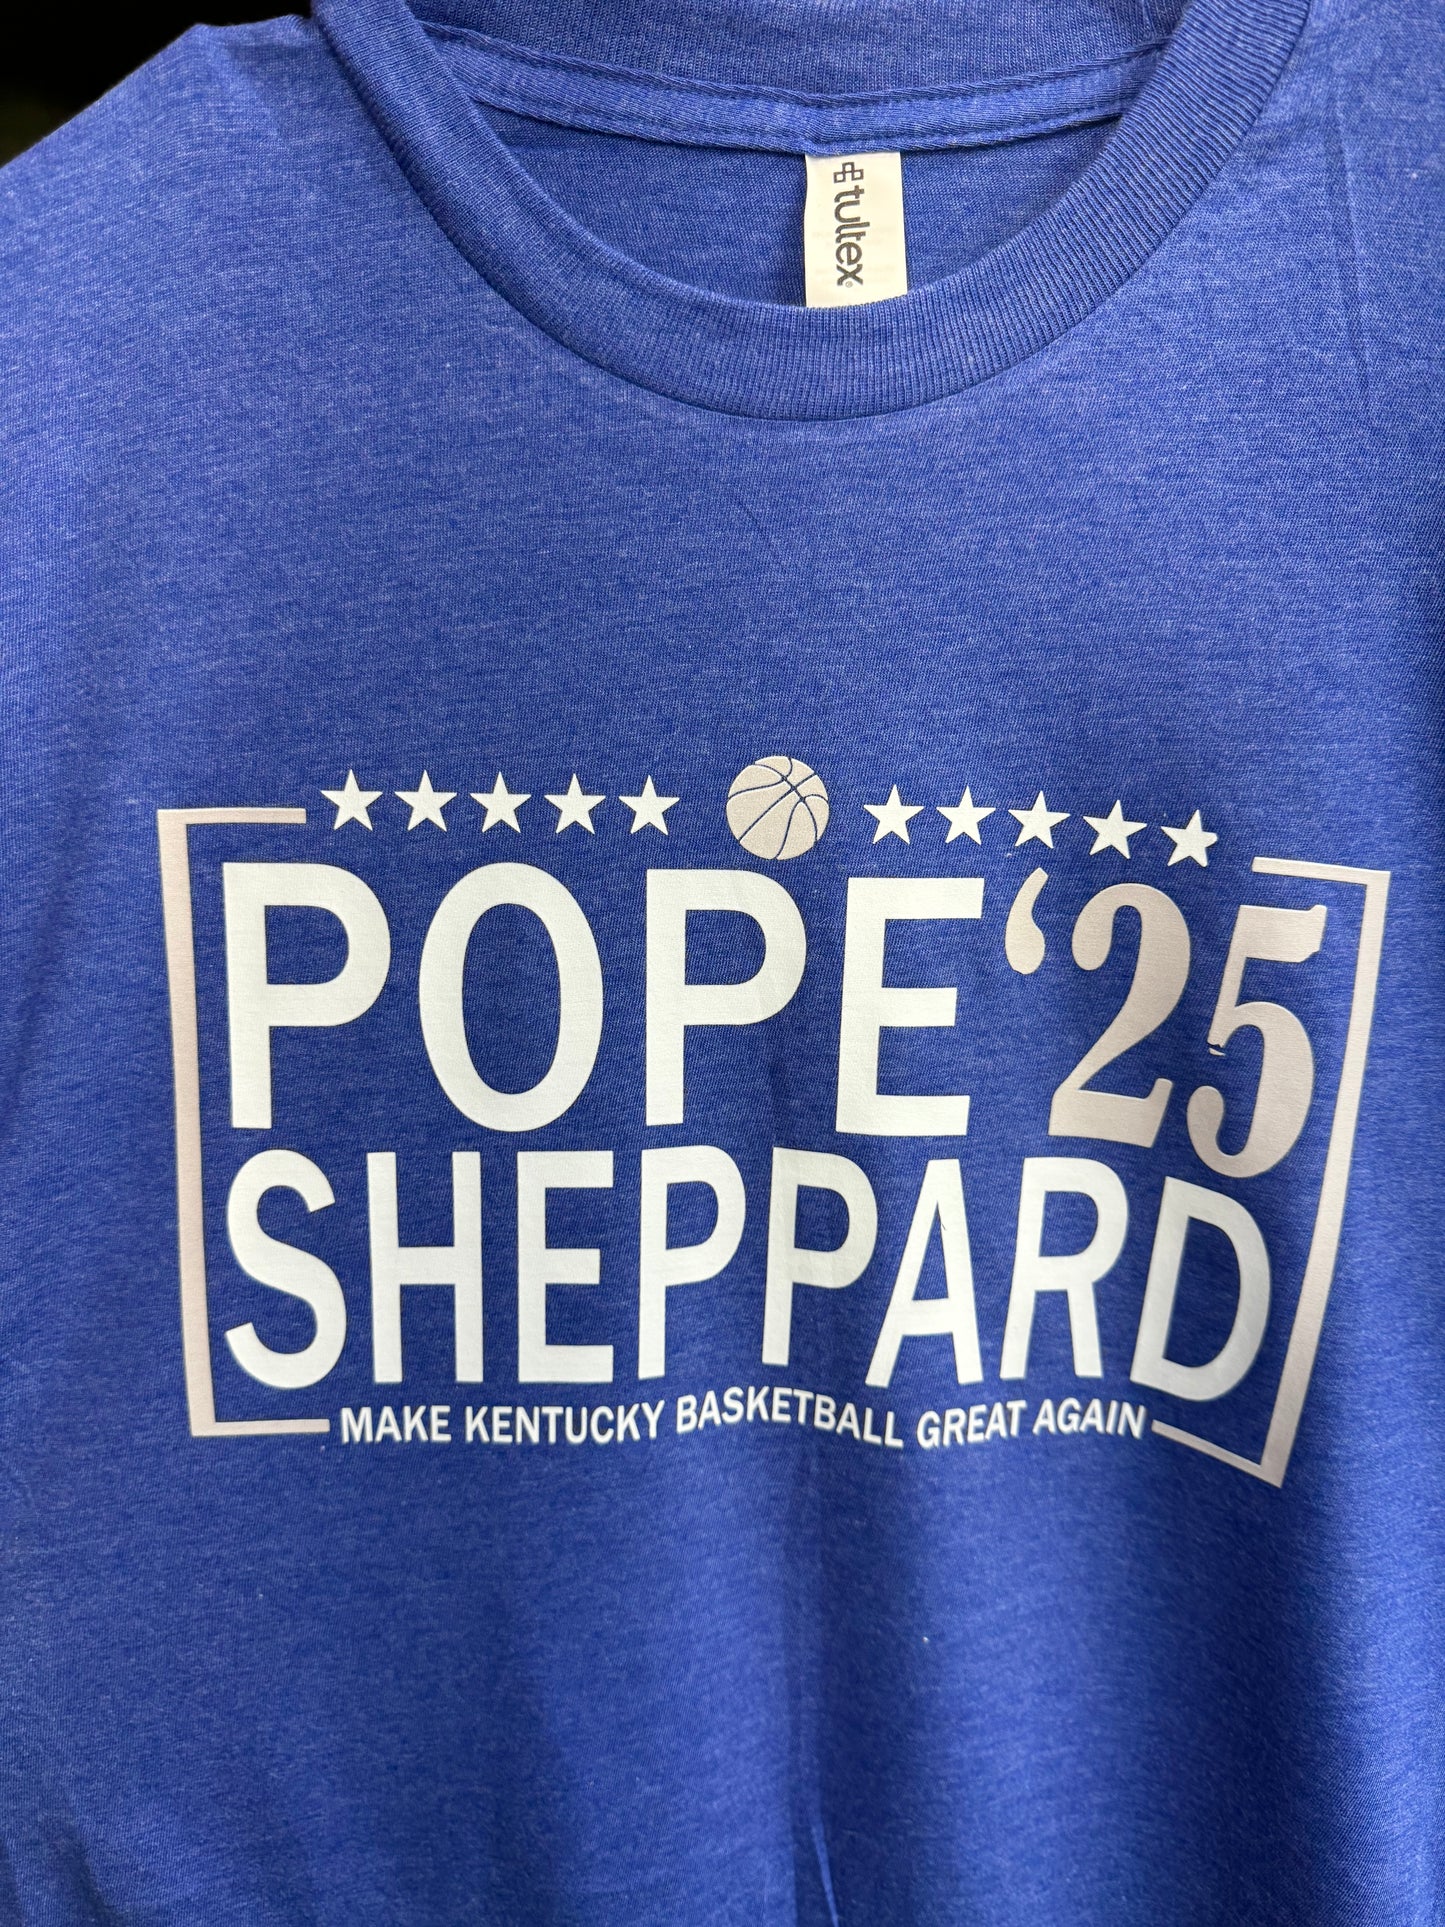 UK Pope Sheppard 25 Shirt(Preorder)